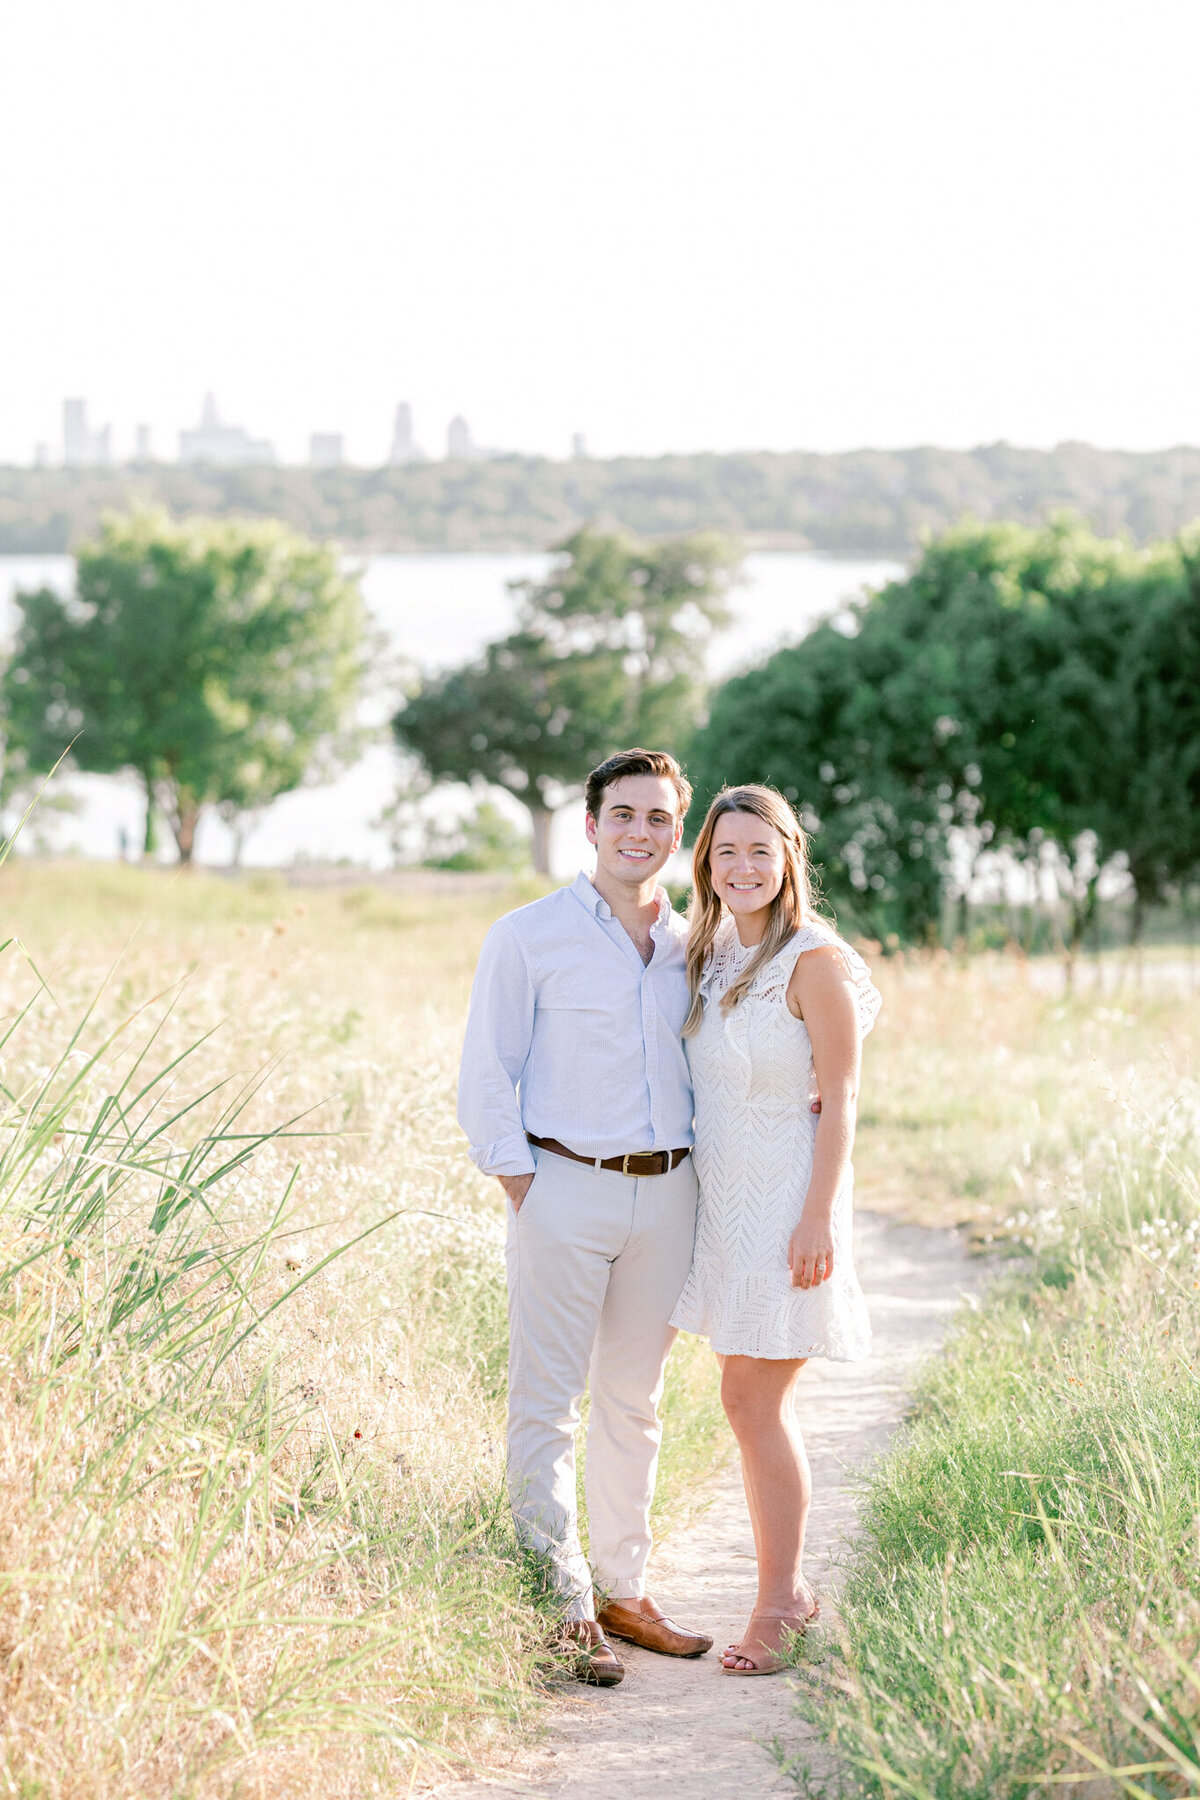 Regan & Owen's White Rock Lake Engagement Session | Dallas Wedding Photographer | Sami Kathryn Photography-11